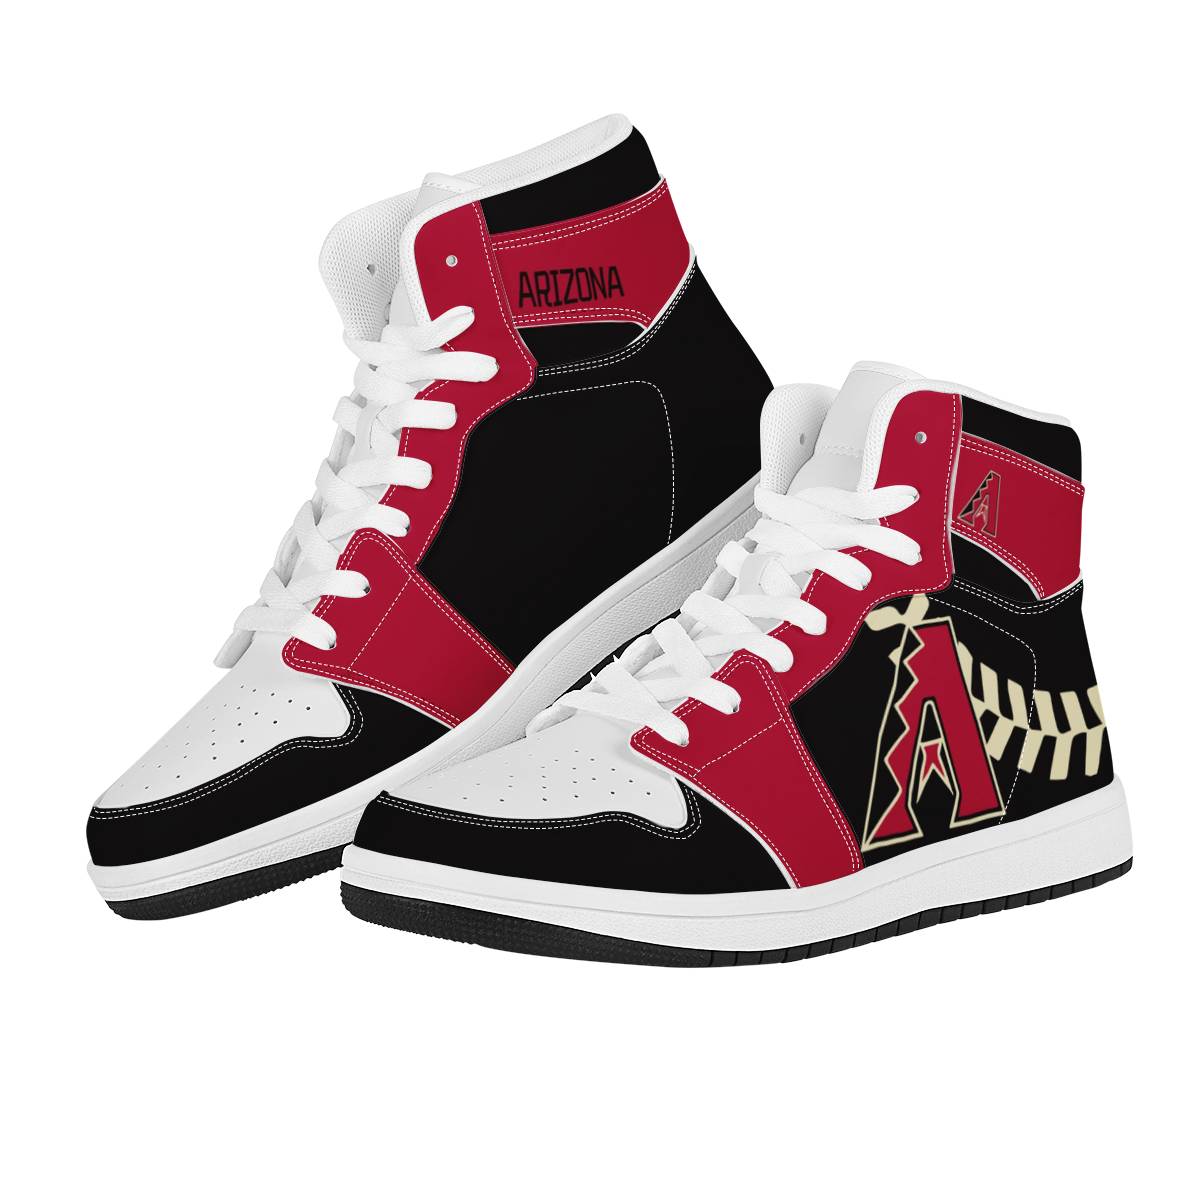 Women's Arizona Diamondbacks High Top Leather AJ1 Sneakers 001